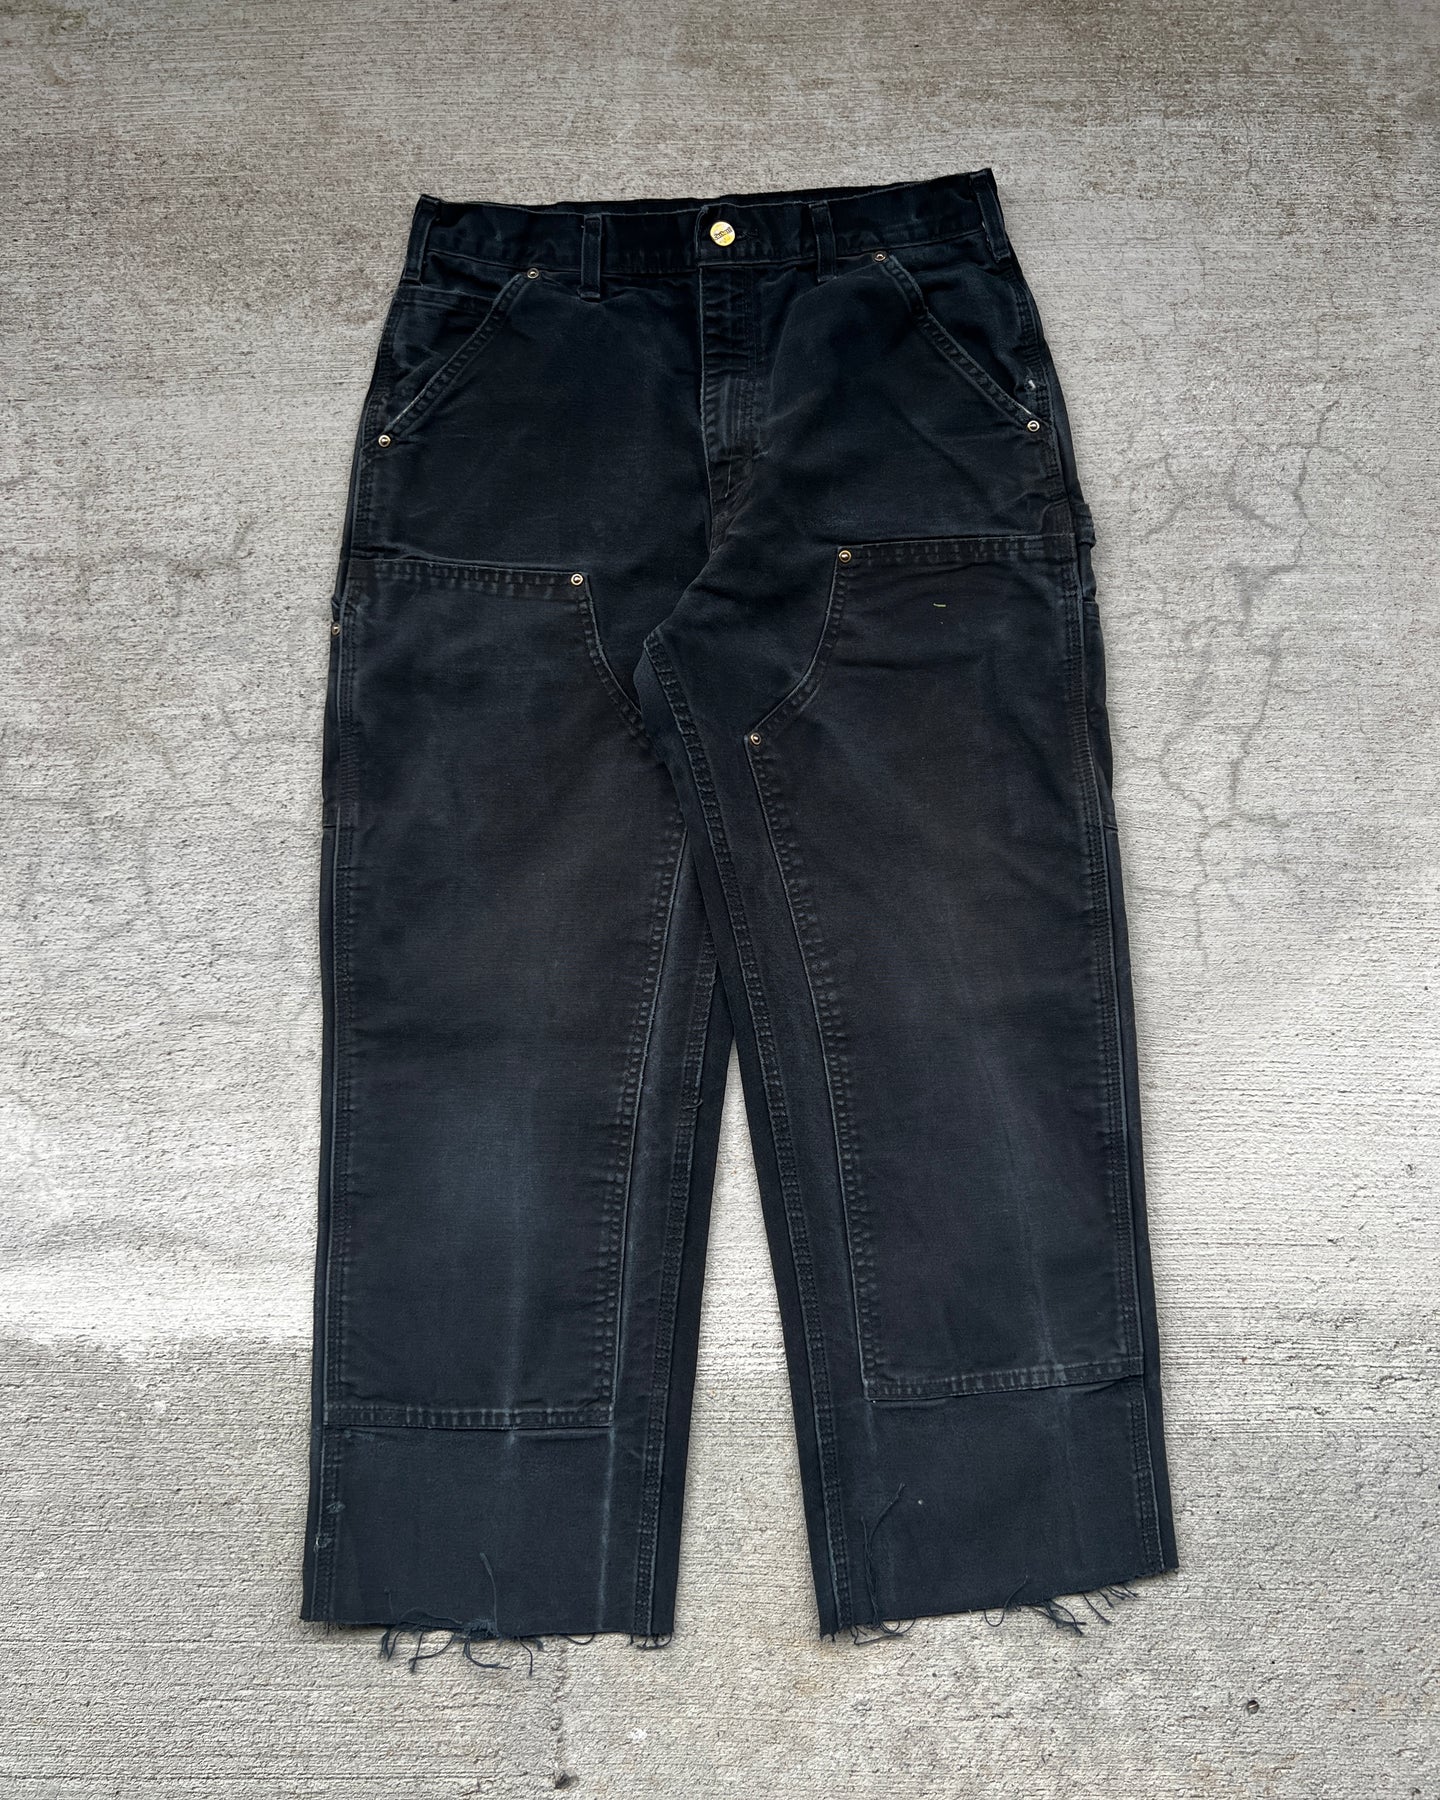 Carhartt Black Double Knee Work Pants - Size 33 x 28